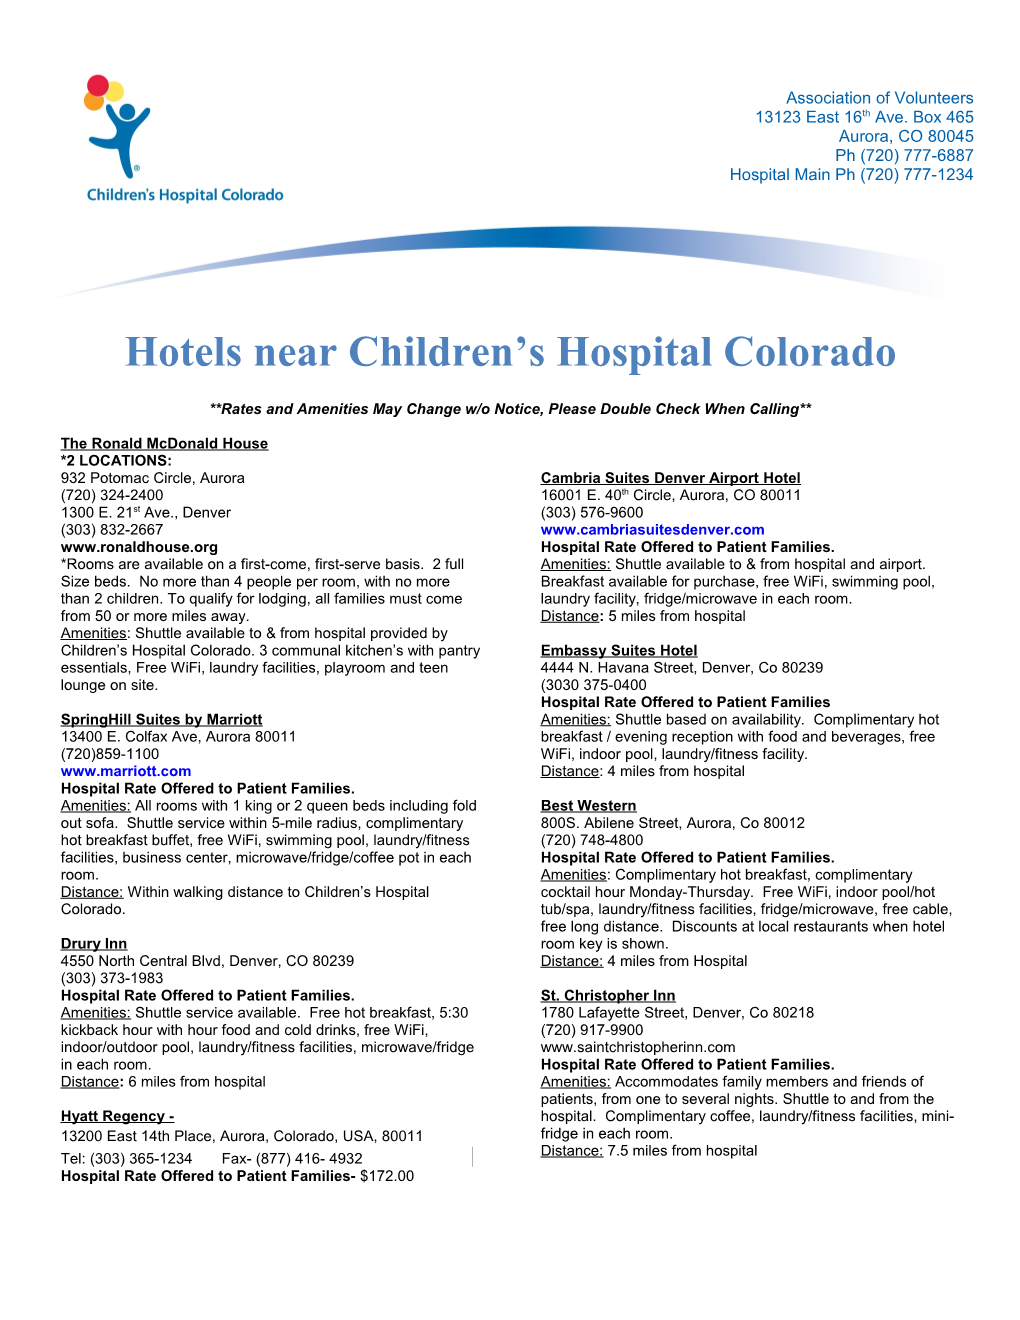 Hotels Near Children S Hospital Colorado